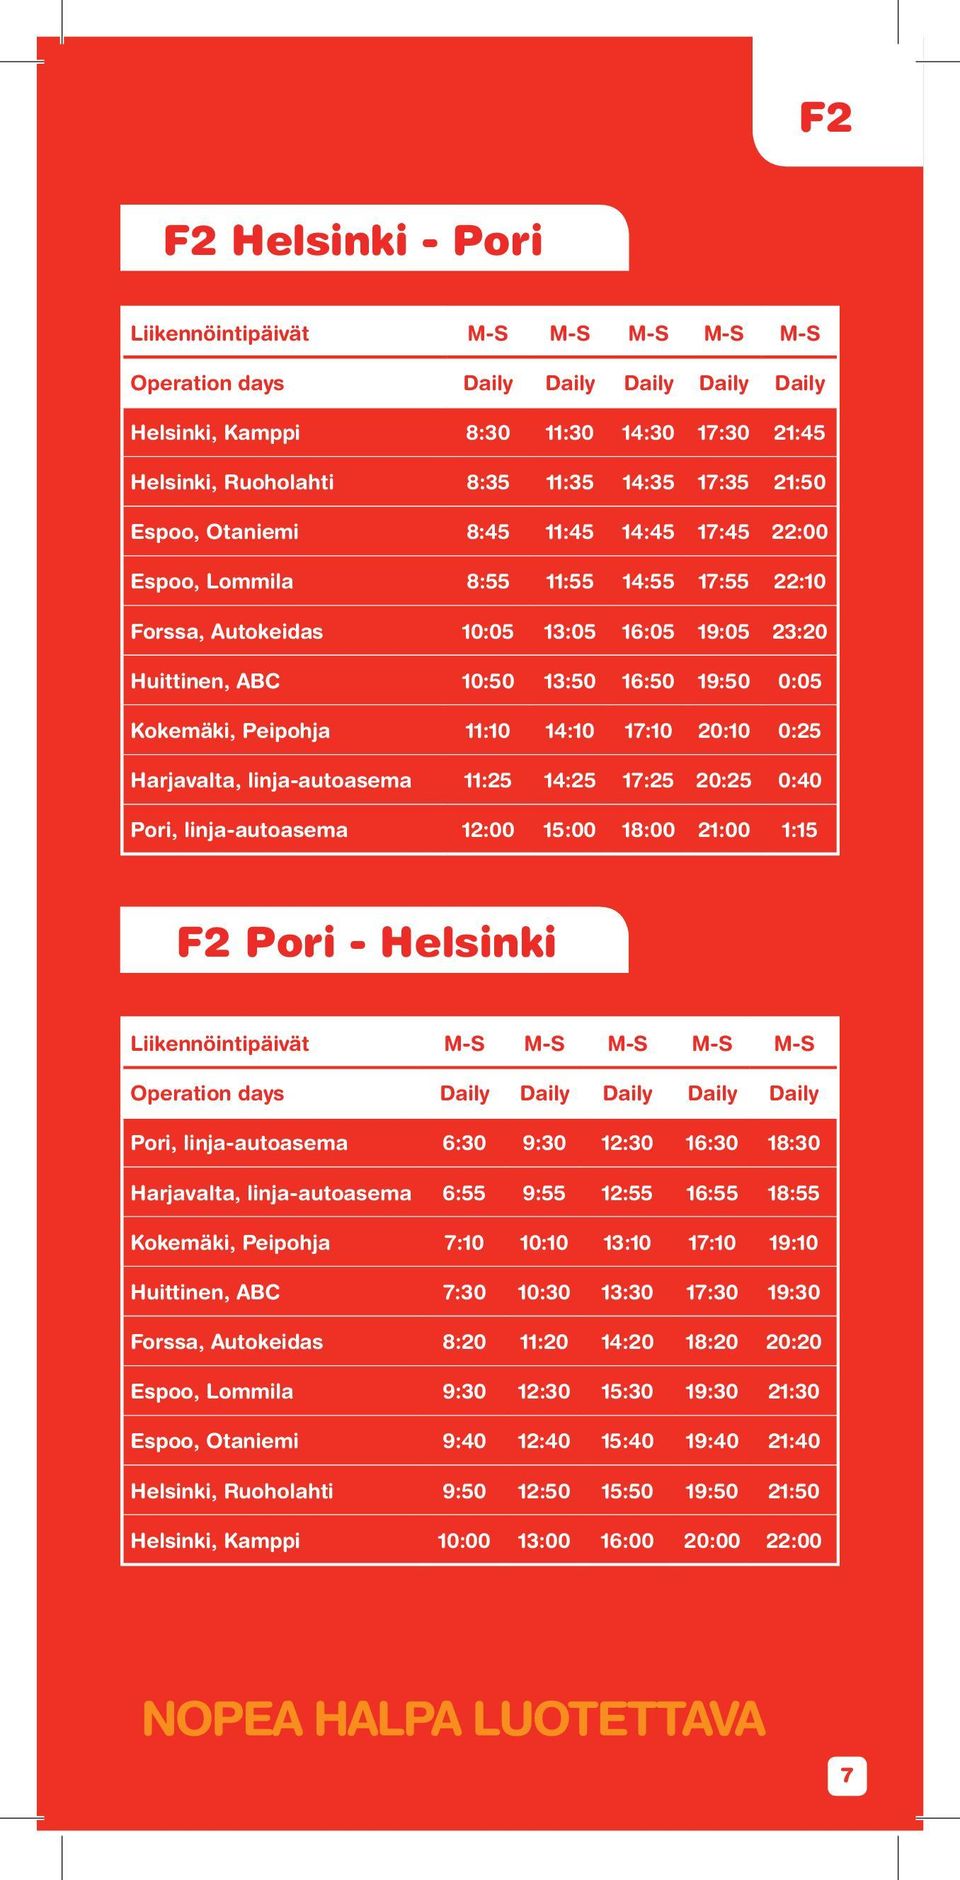 Peipohja 11:10 14:10 17:10 20:10 0:25 Harjavalta, linja-autoasema 11:25 14:25 17:25 20:25 0:40 Pori, linja-autoasema 12:00 15:00 18:00 21:00 1:15 F2 Pori - Helsinki Liikennöintipäivät M-S M-S M-S M-S